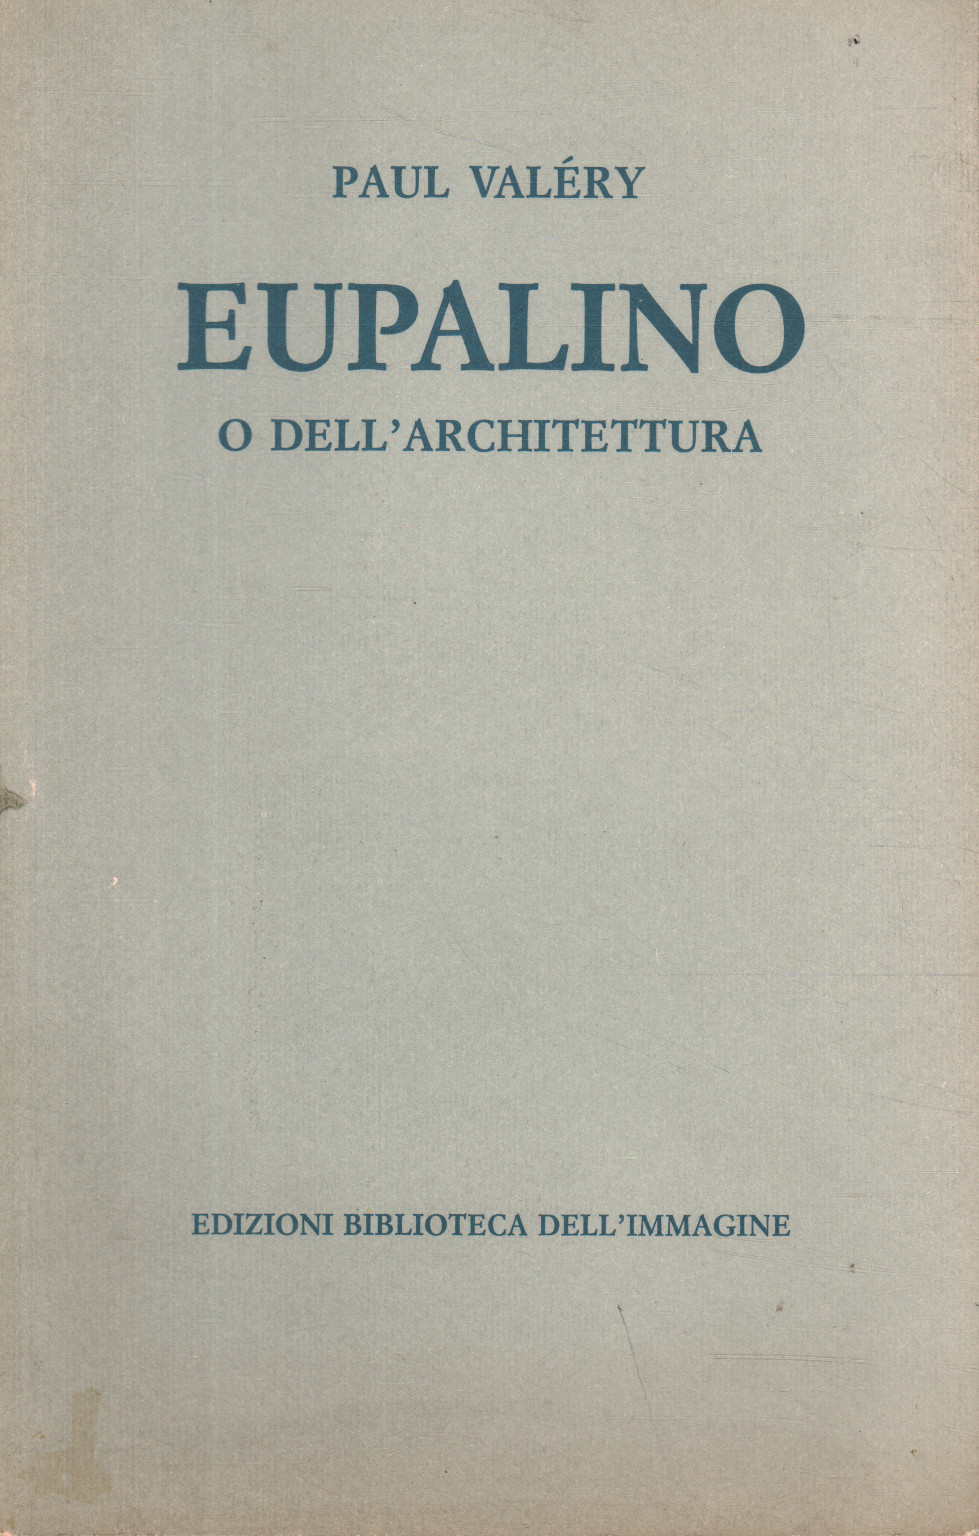 Eupaline or Architecture